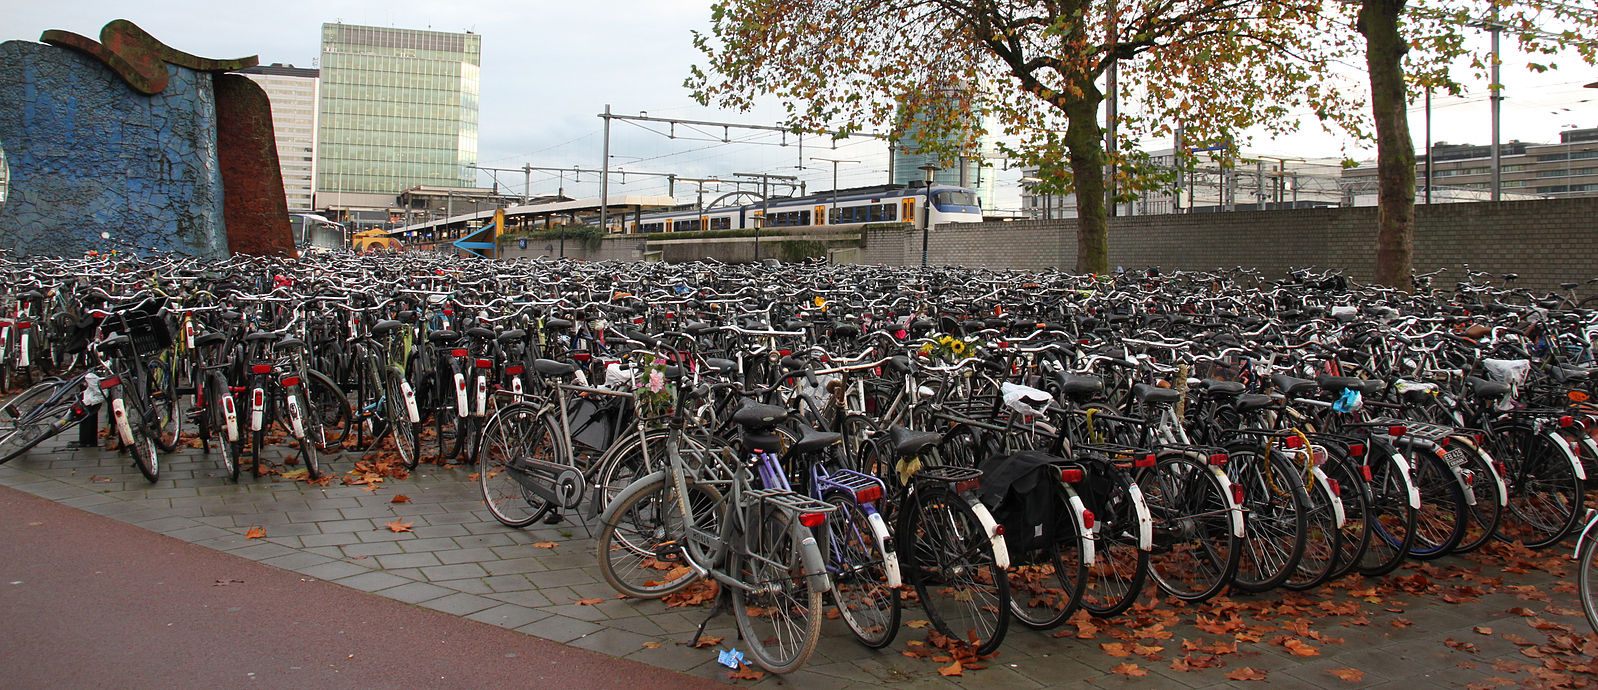 warmte springen ik ben gelukkig Utrecht Just Wheeled Out the World's Biggest Bike Parking Garage - Atlas  Obscura